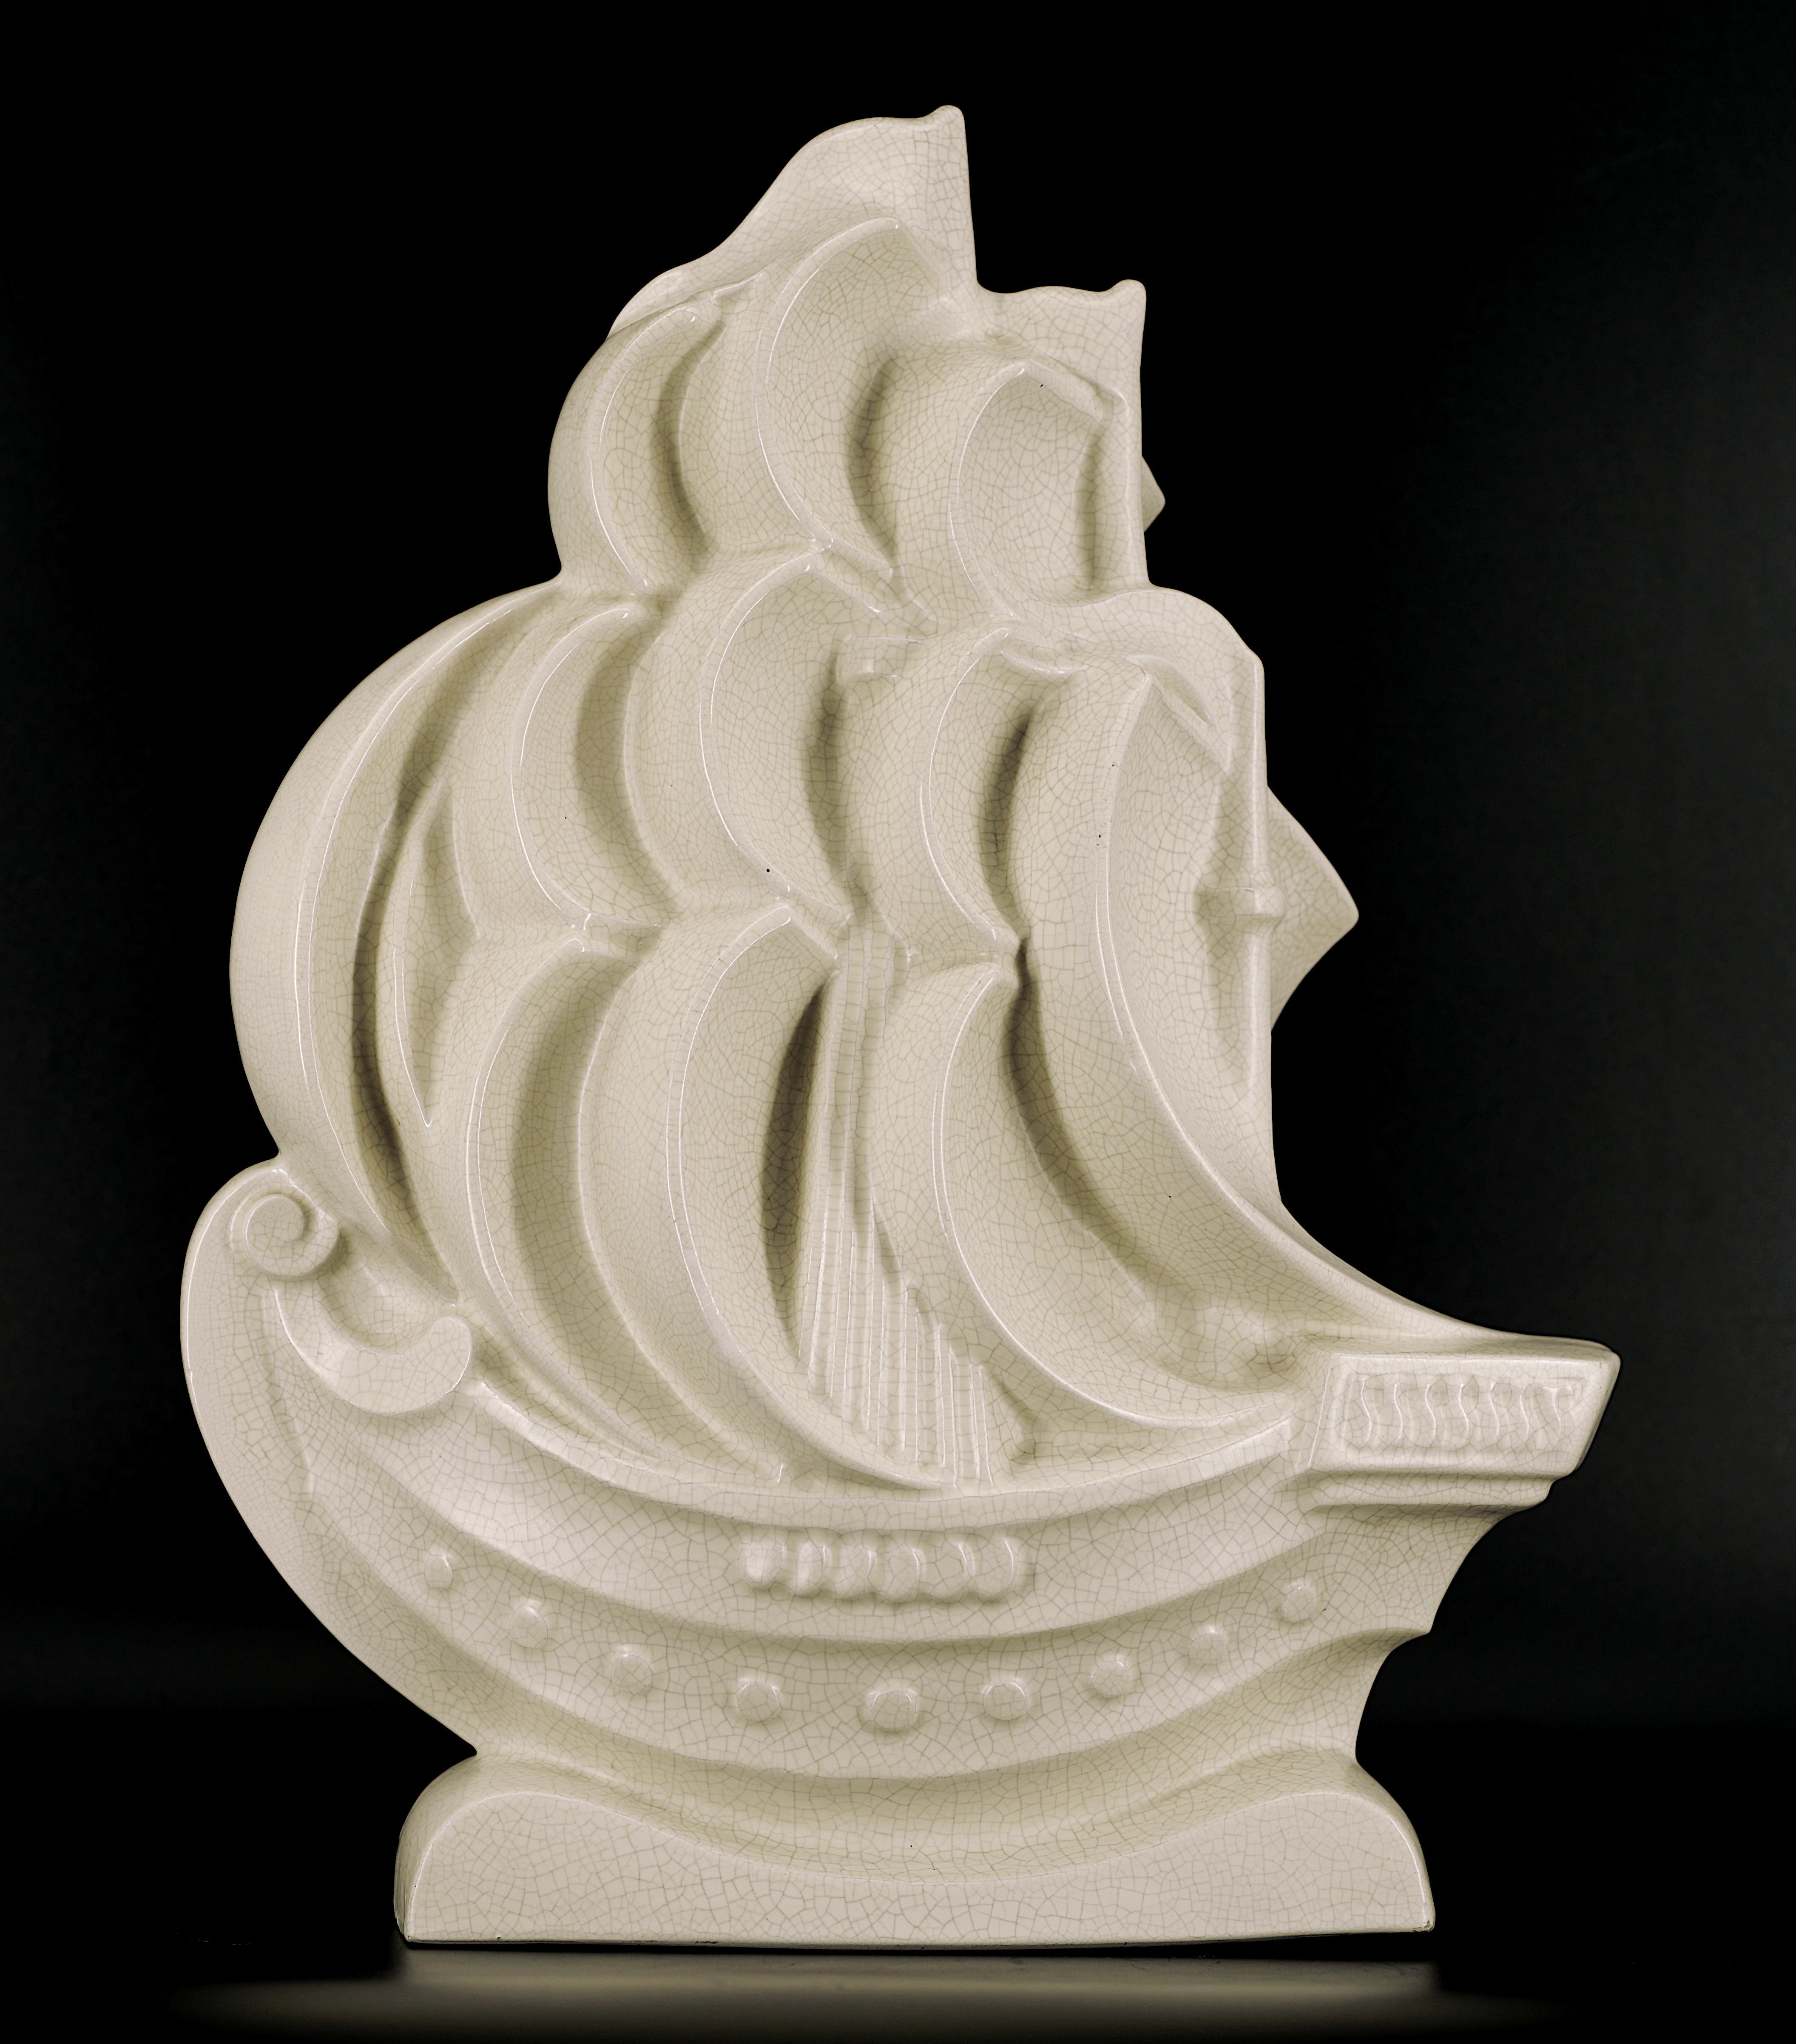 Lejan French Art Deco Crackle Glaze Ceramic Ship Sculpture at Orchies's, 1930 For Sale 2